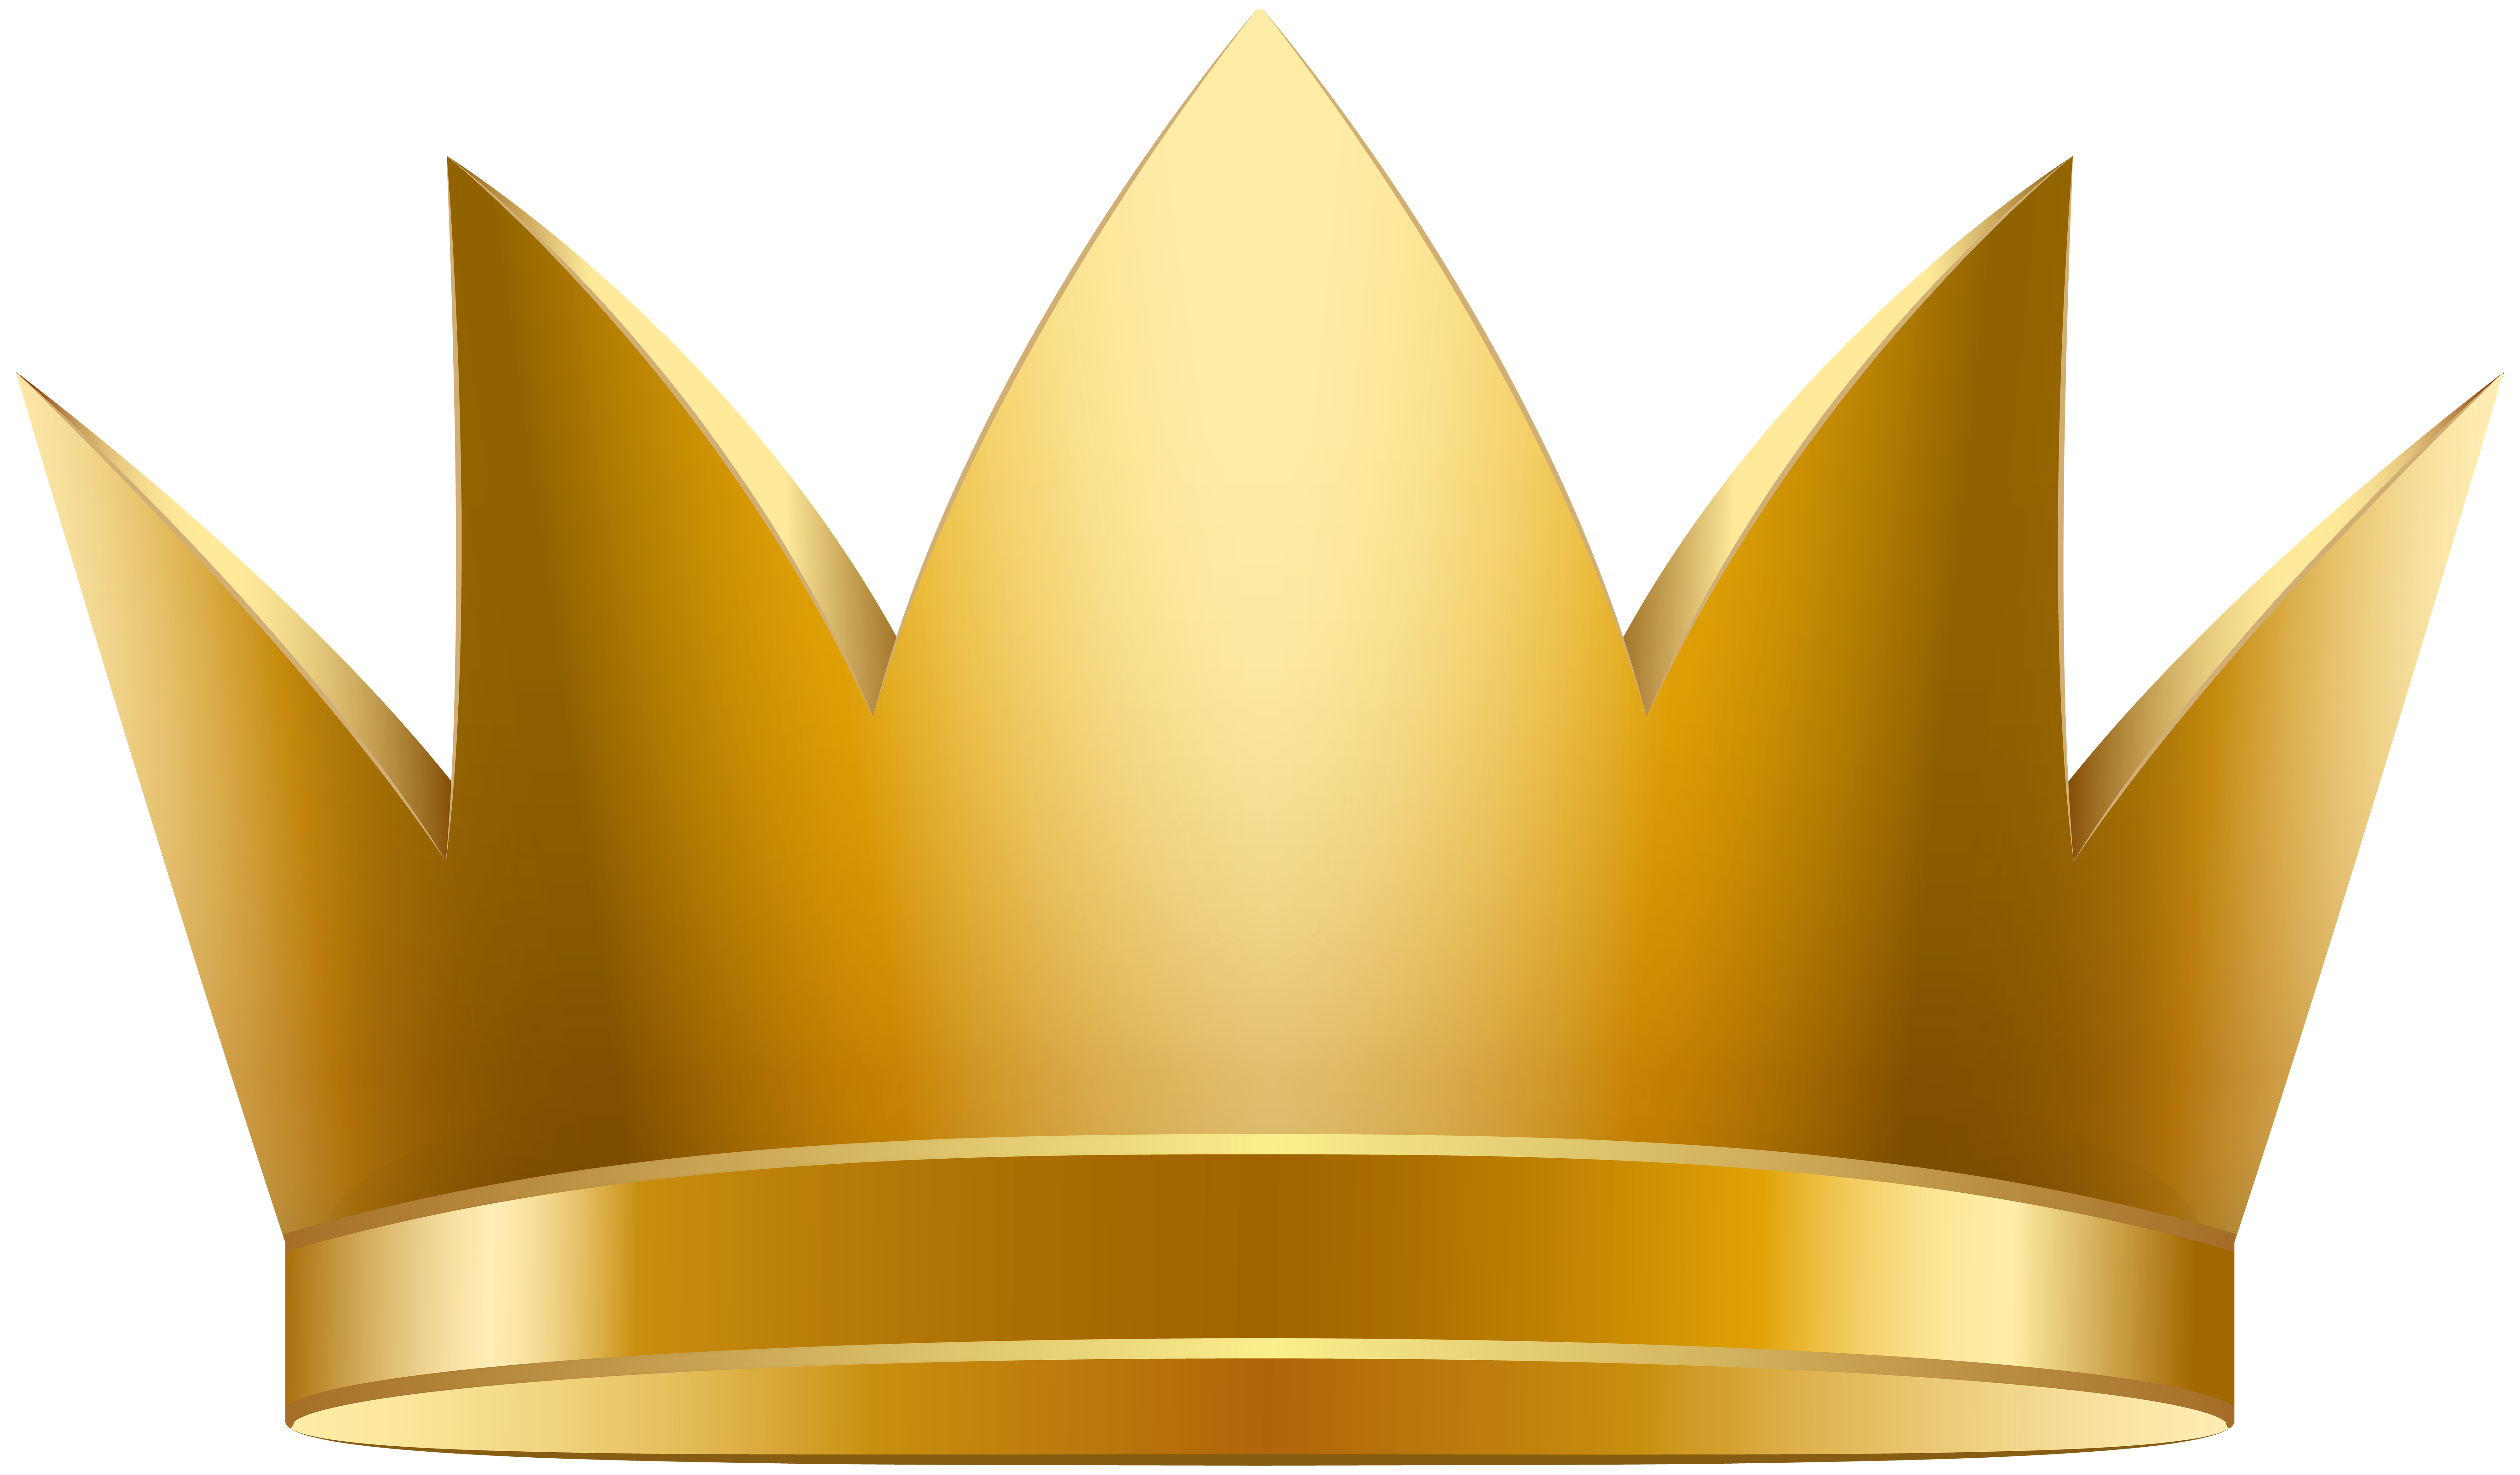 crowns clipart golden crown